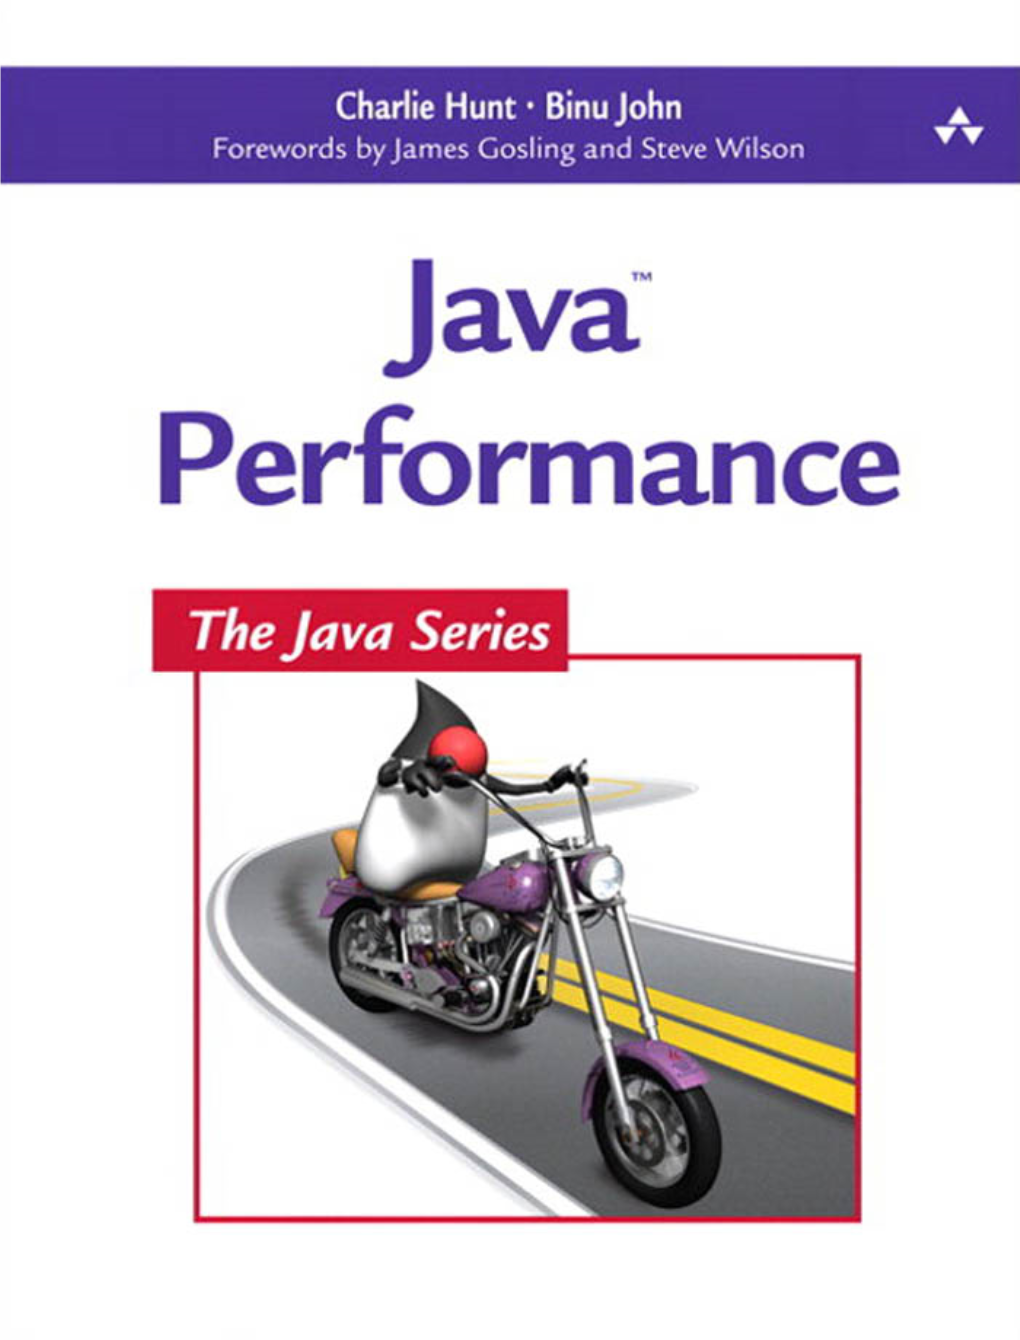 Java Performance / Charlie Hunt, Binu John